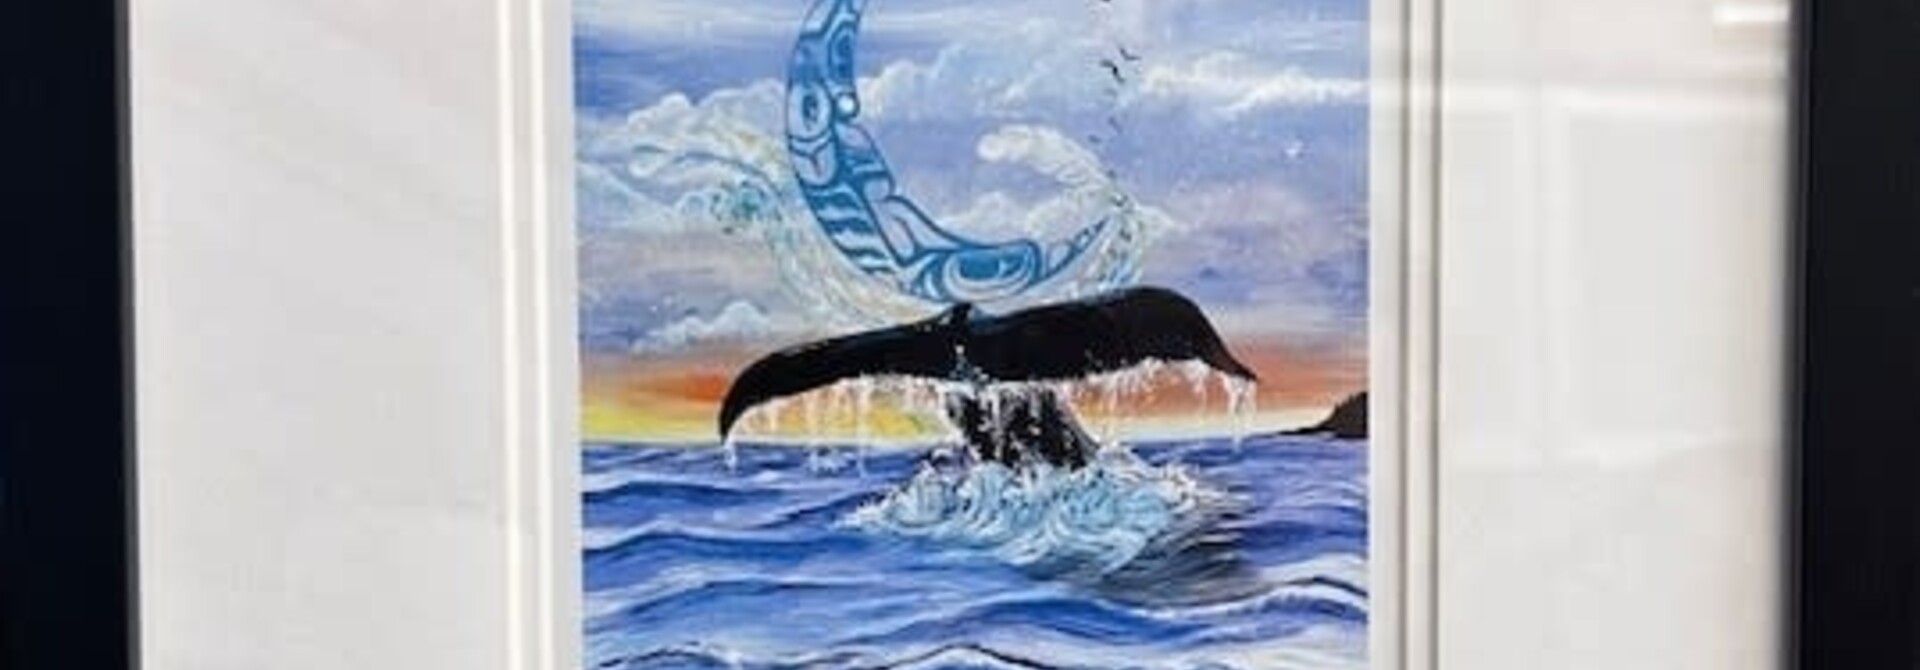 Framed Art Card Whale Song by Karen Erickson